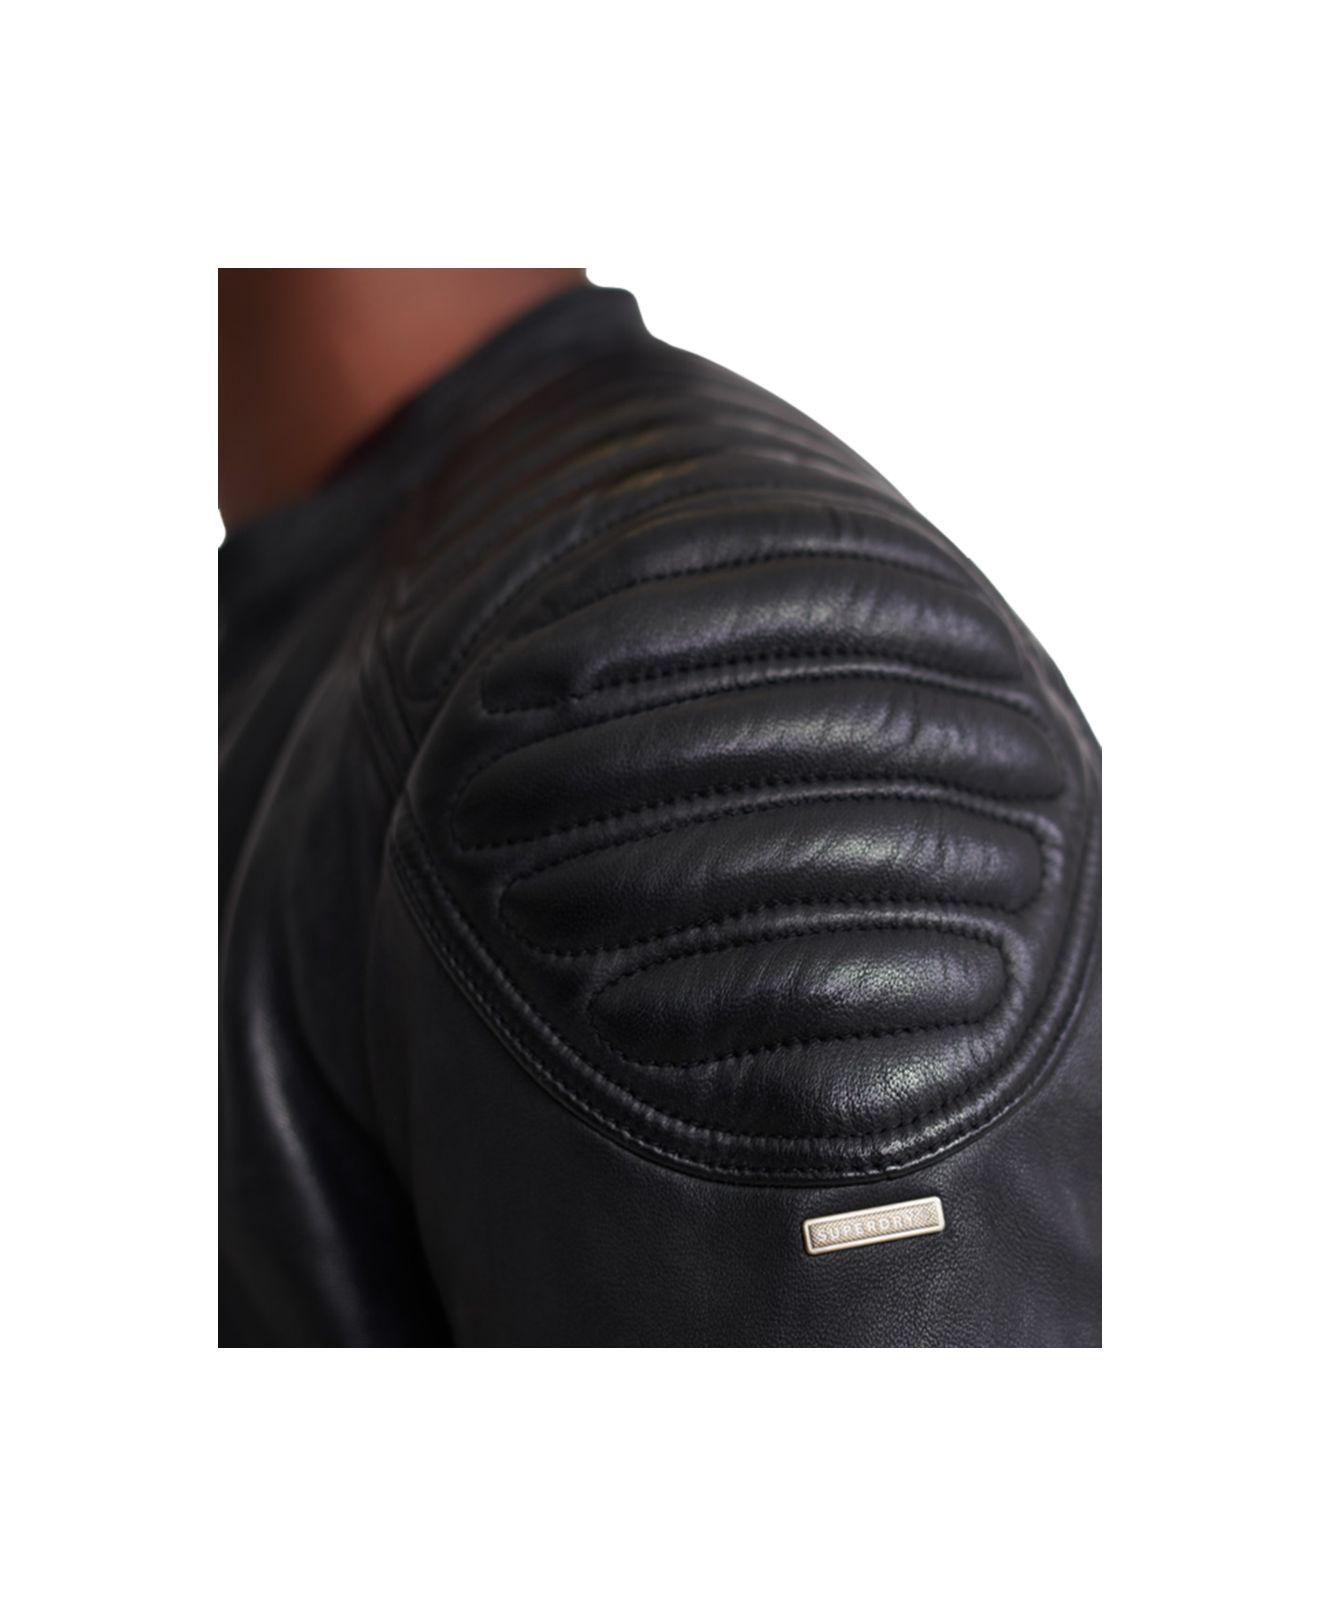 Superdry City Hero Leather Racer Jacket in Black for Men | Lyst